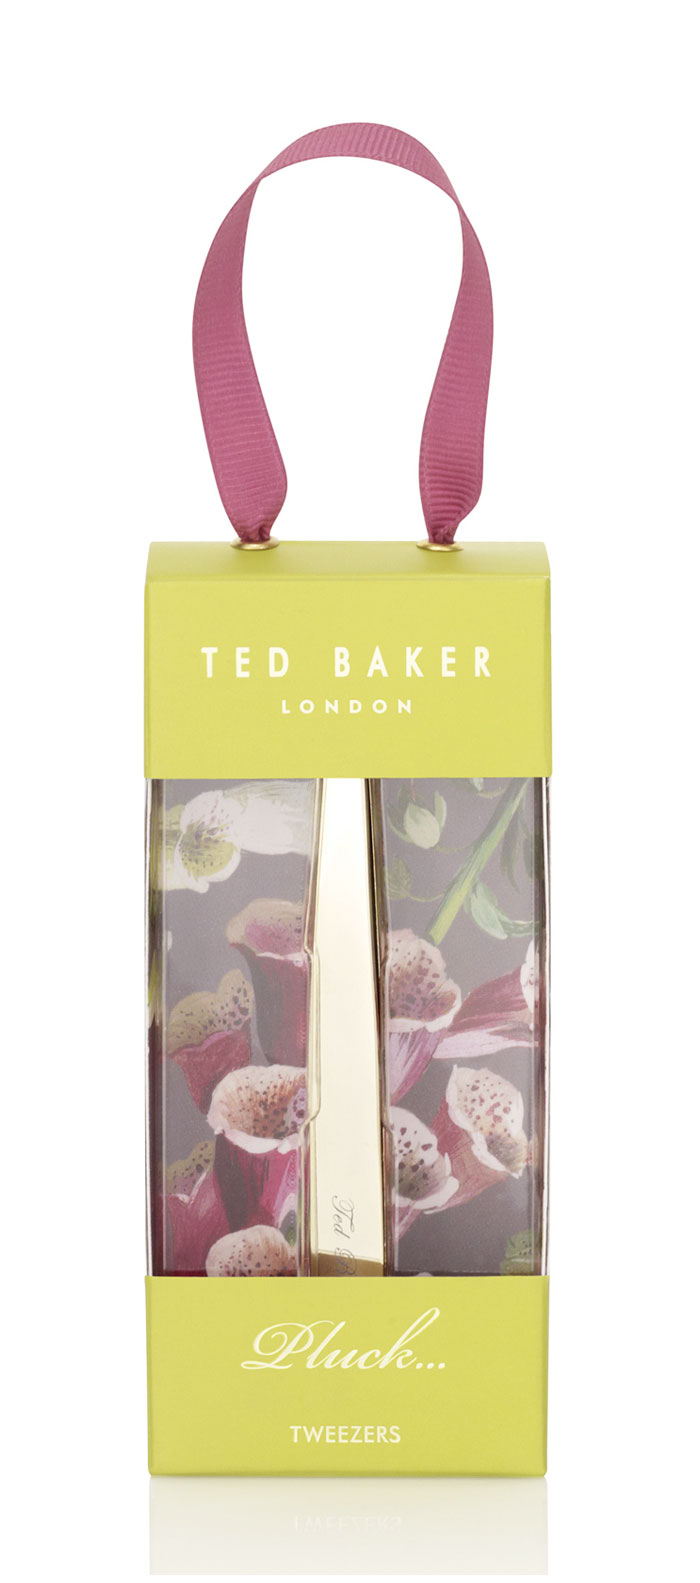 Ted Baker Beauty Accessories | Dieline - Design, Branding & Packaging ...